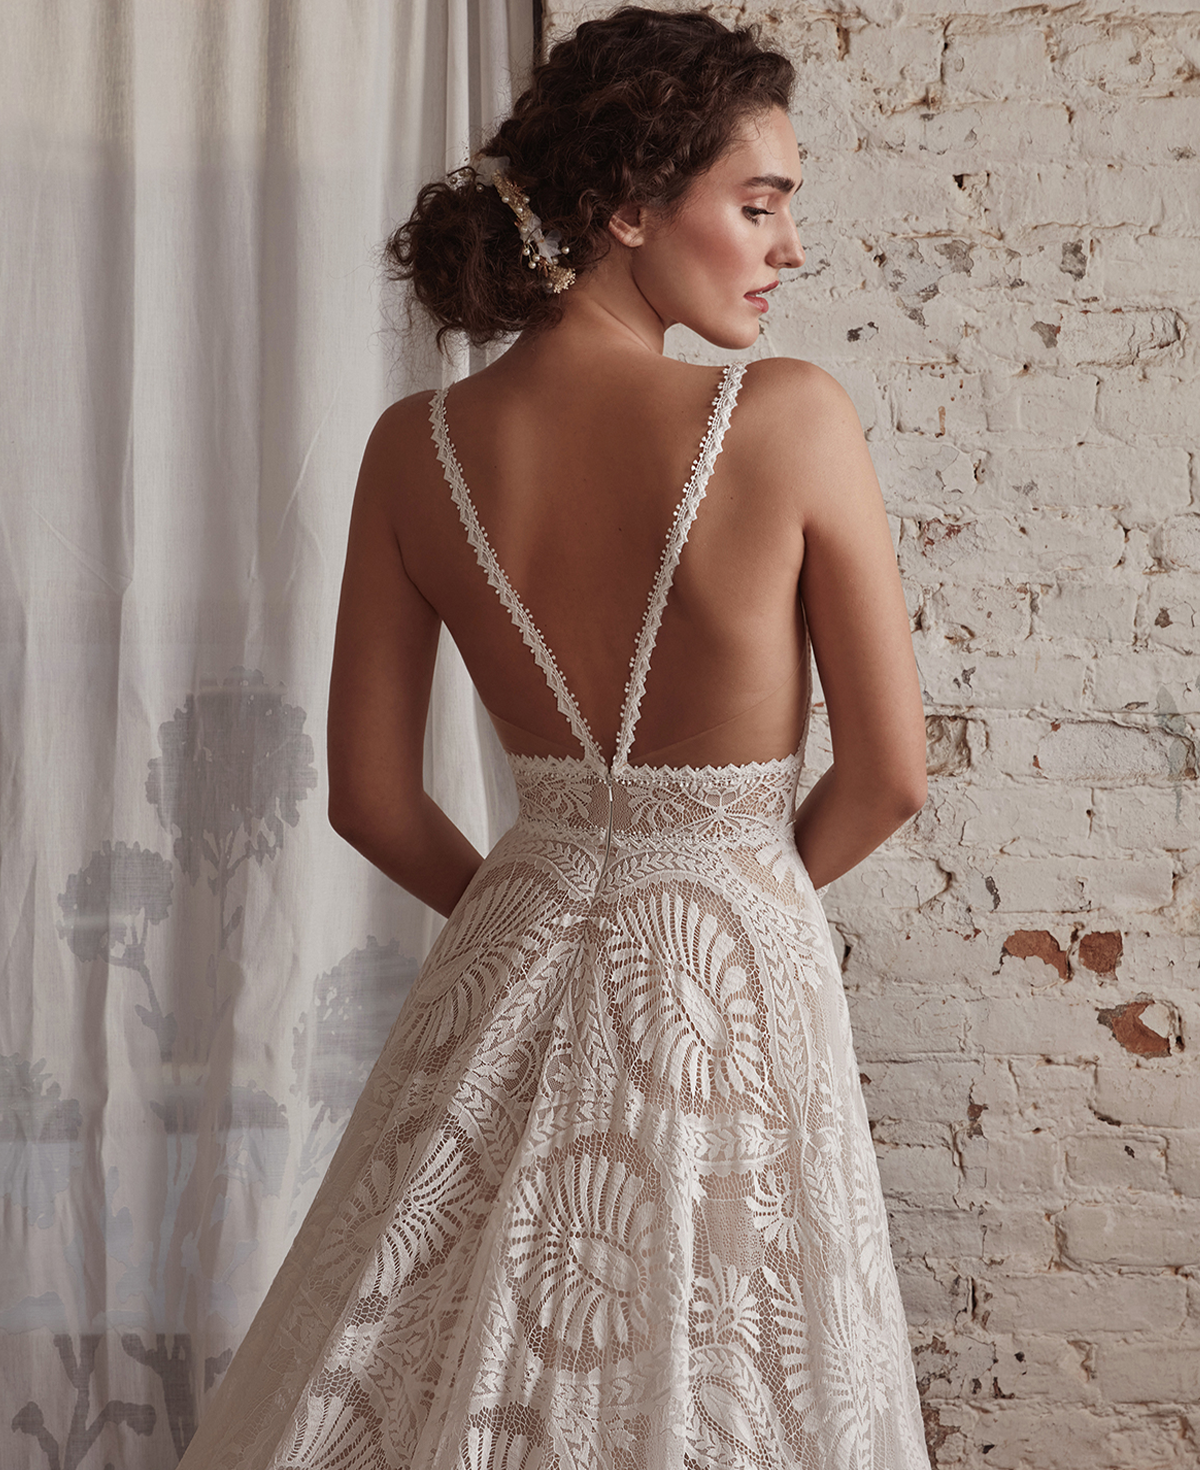 Spaghetti Strap or Long Sleeve Boho Wedding Dress with Backless A Line Silhouette